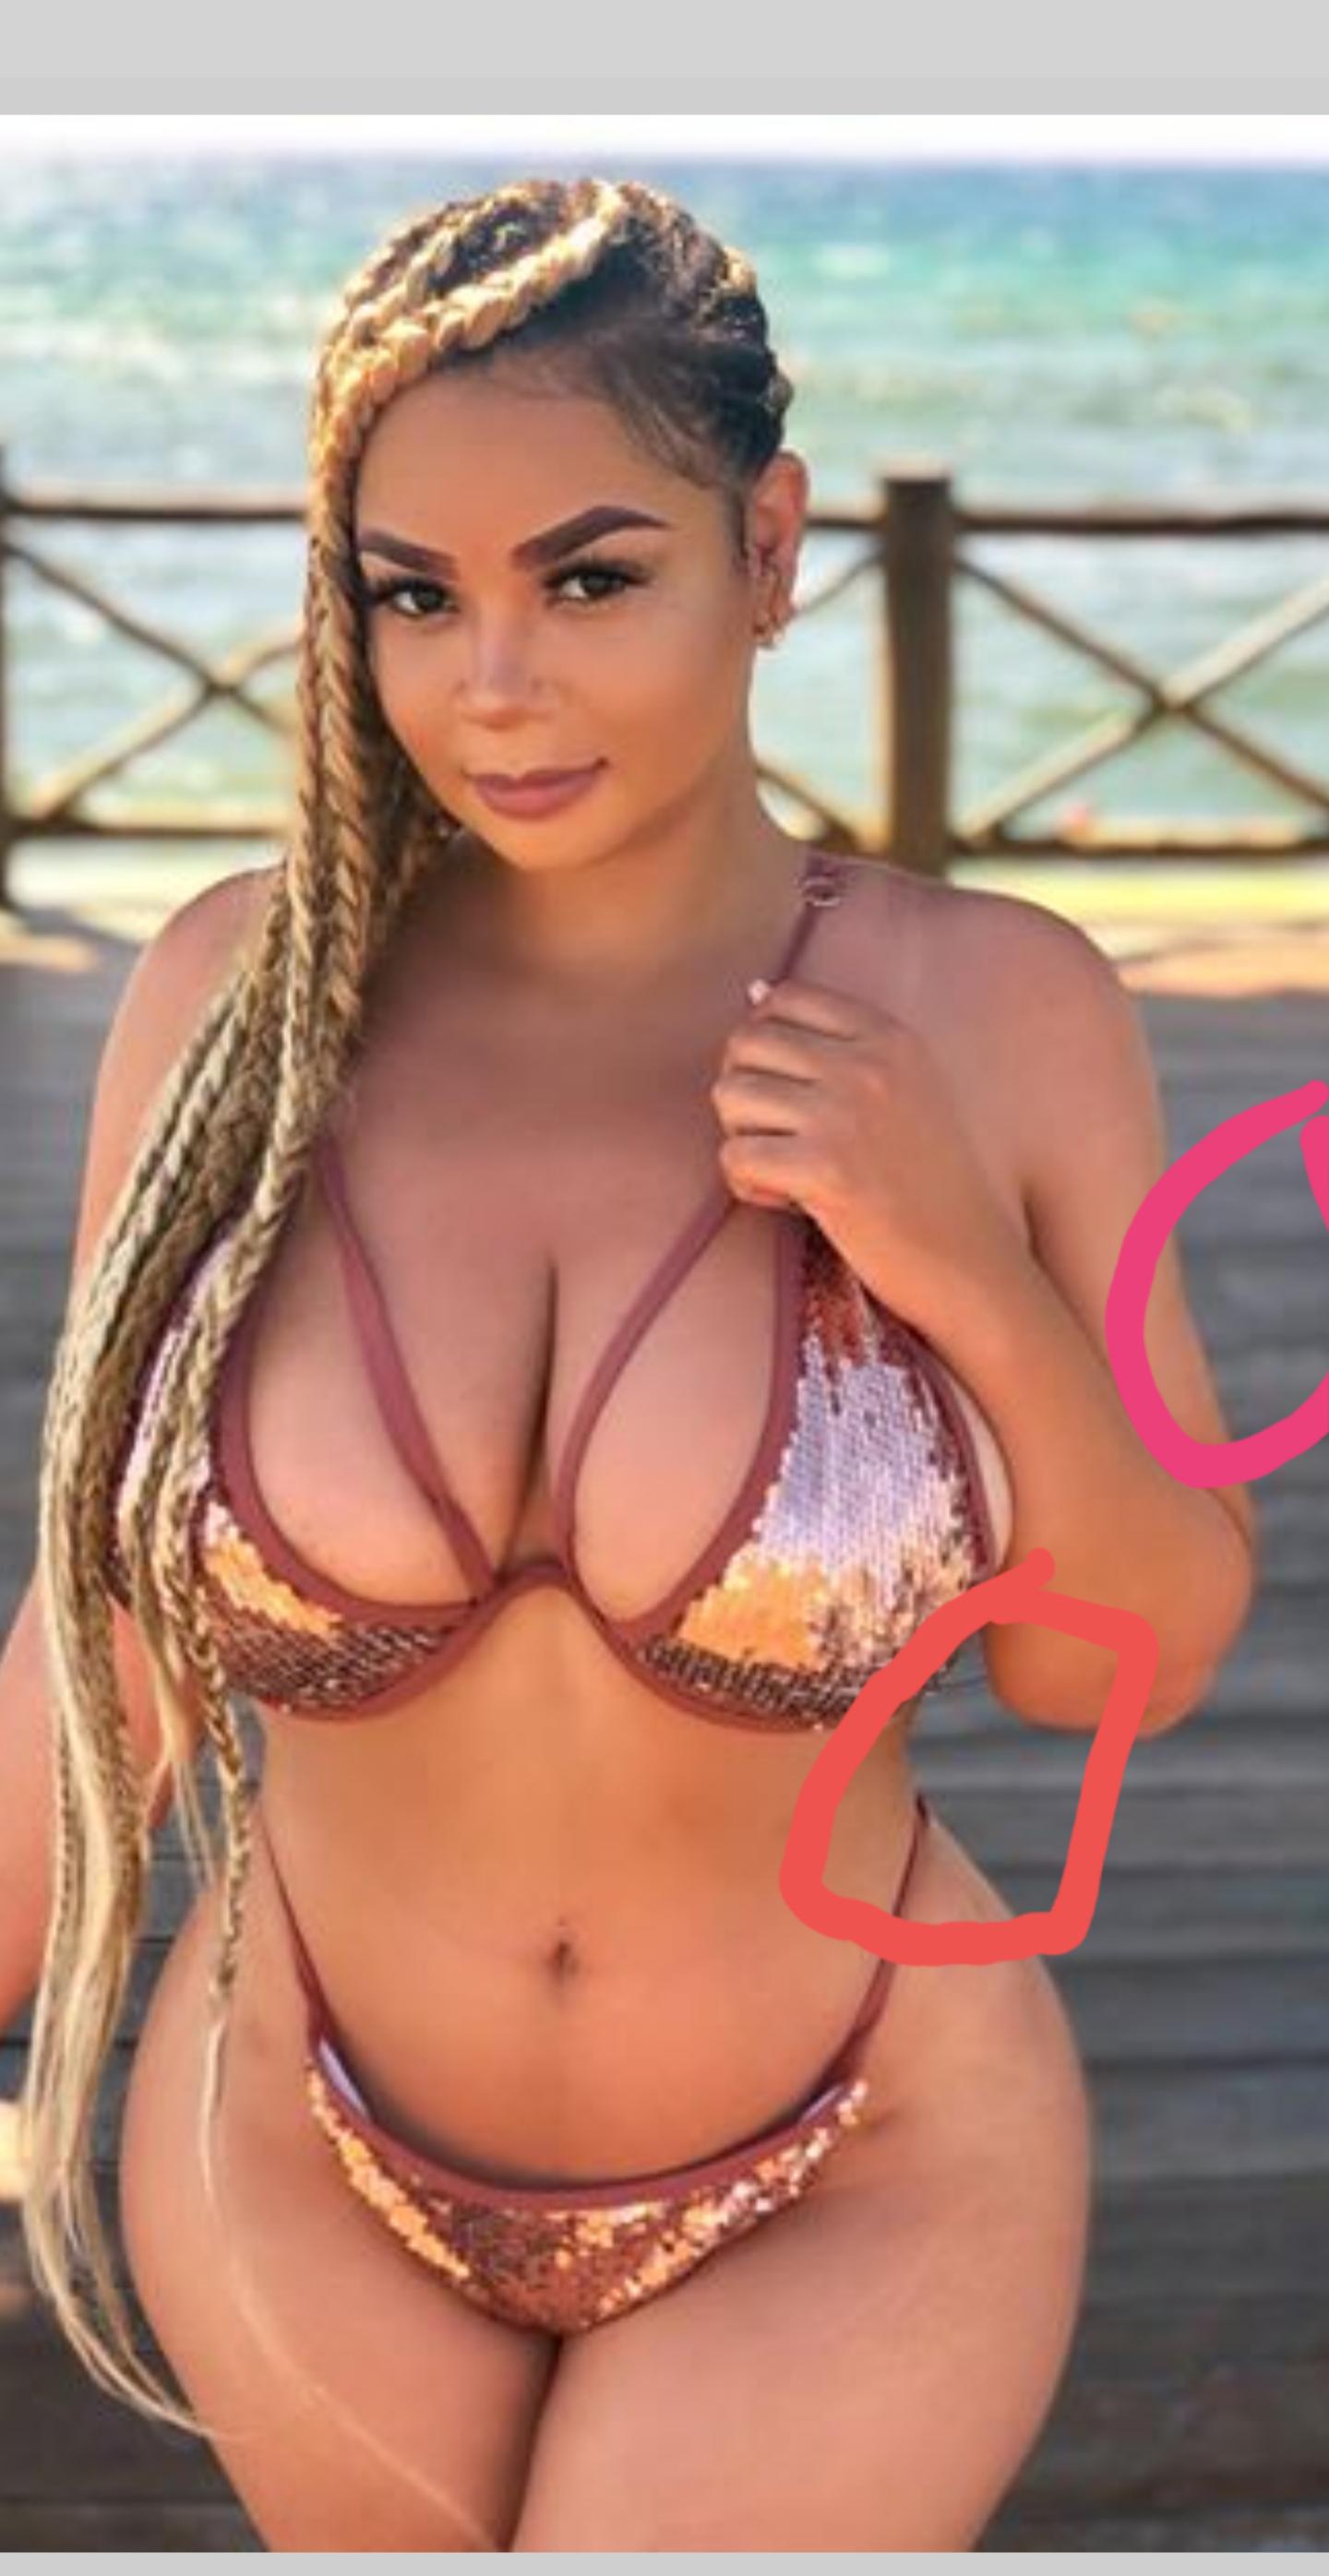 Fake Instagram Models - babe in a bikini